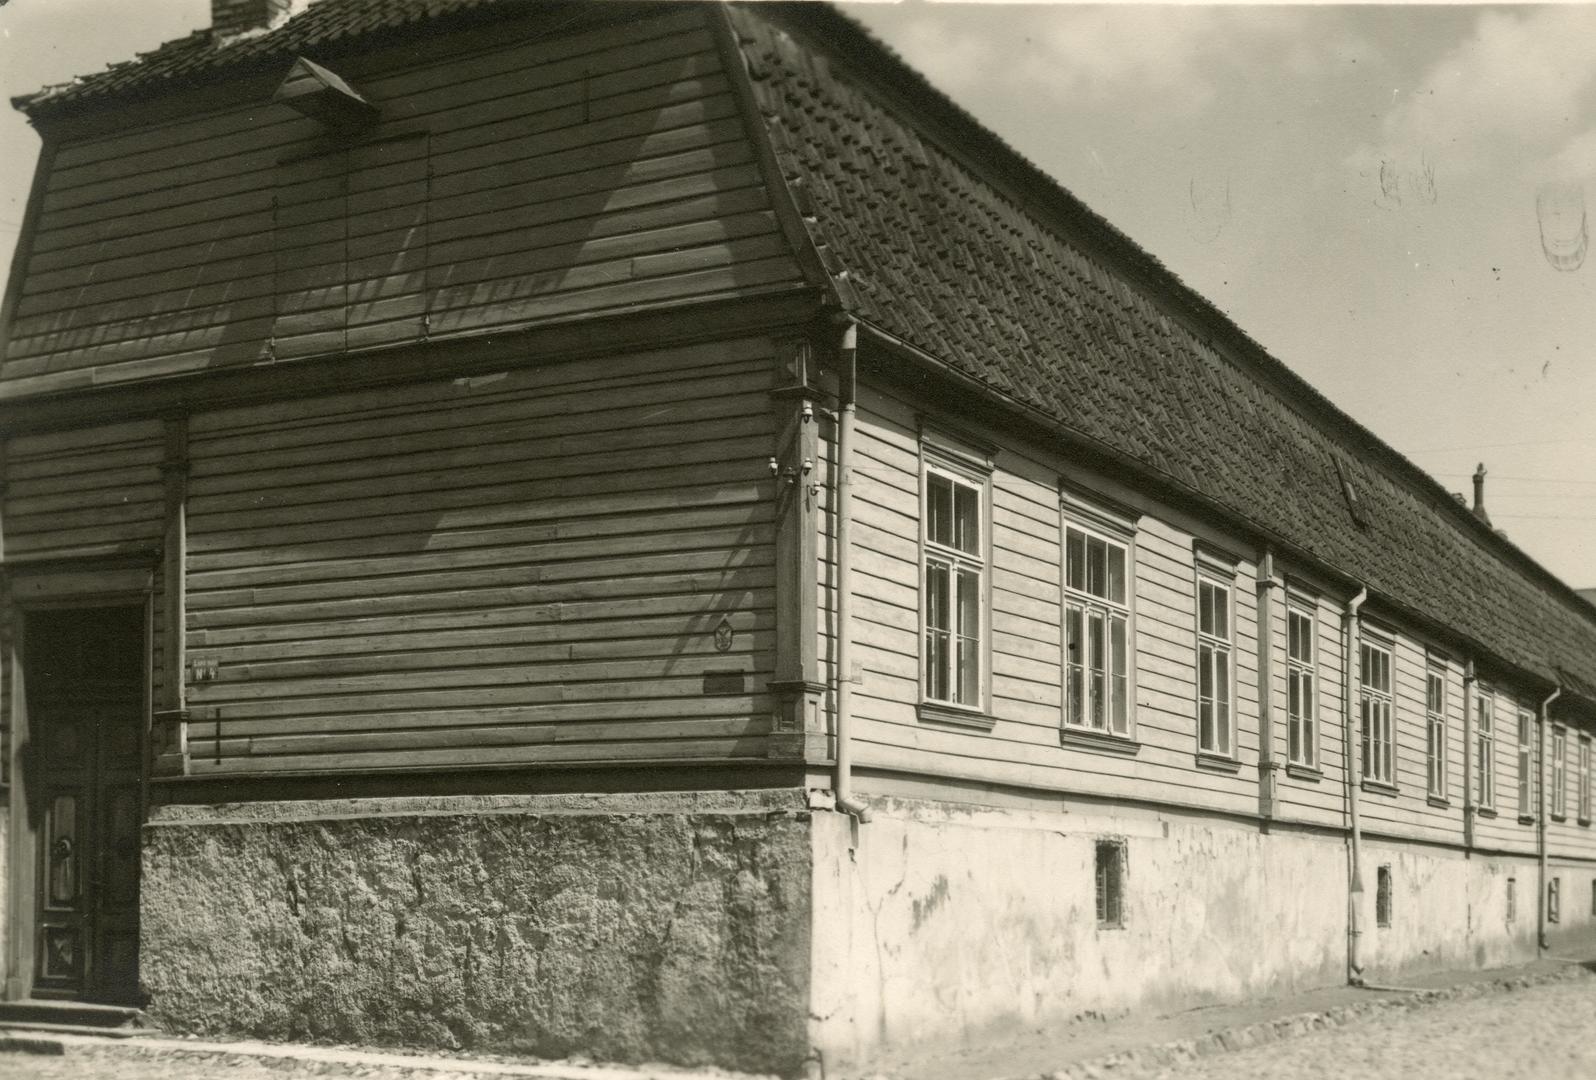 Pärnu City 3. Primary school building